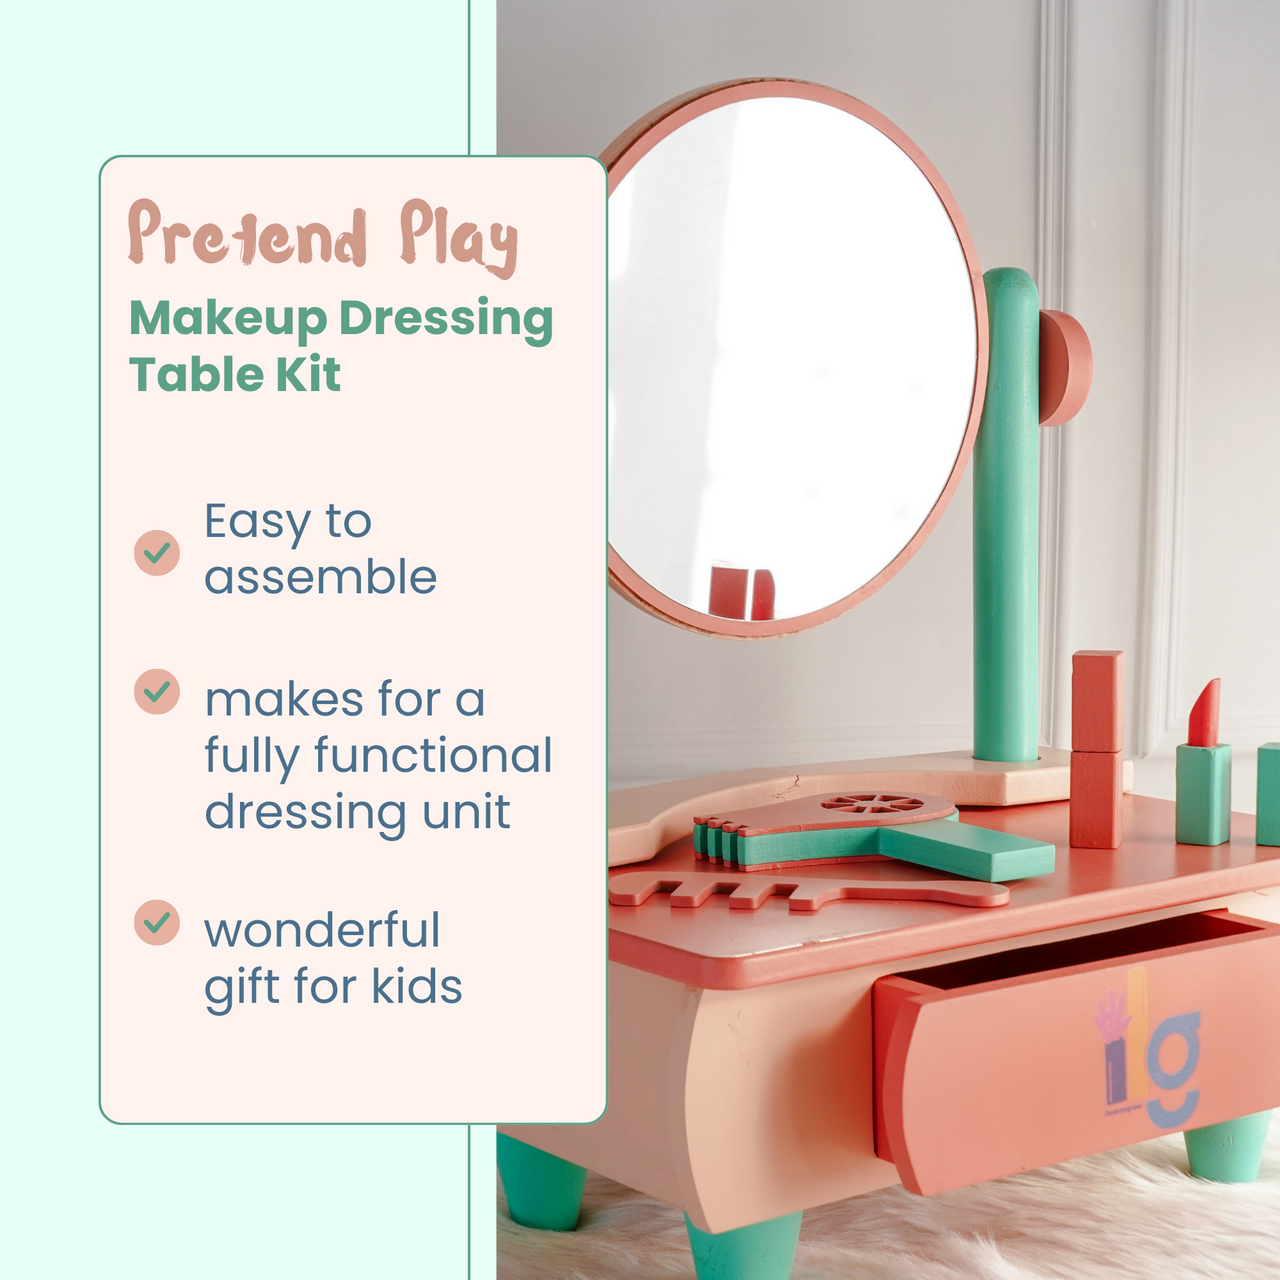 ilearnngrow Pretend Play - Dressing Table